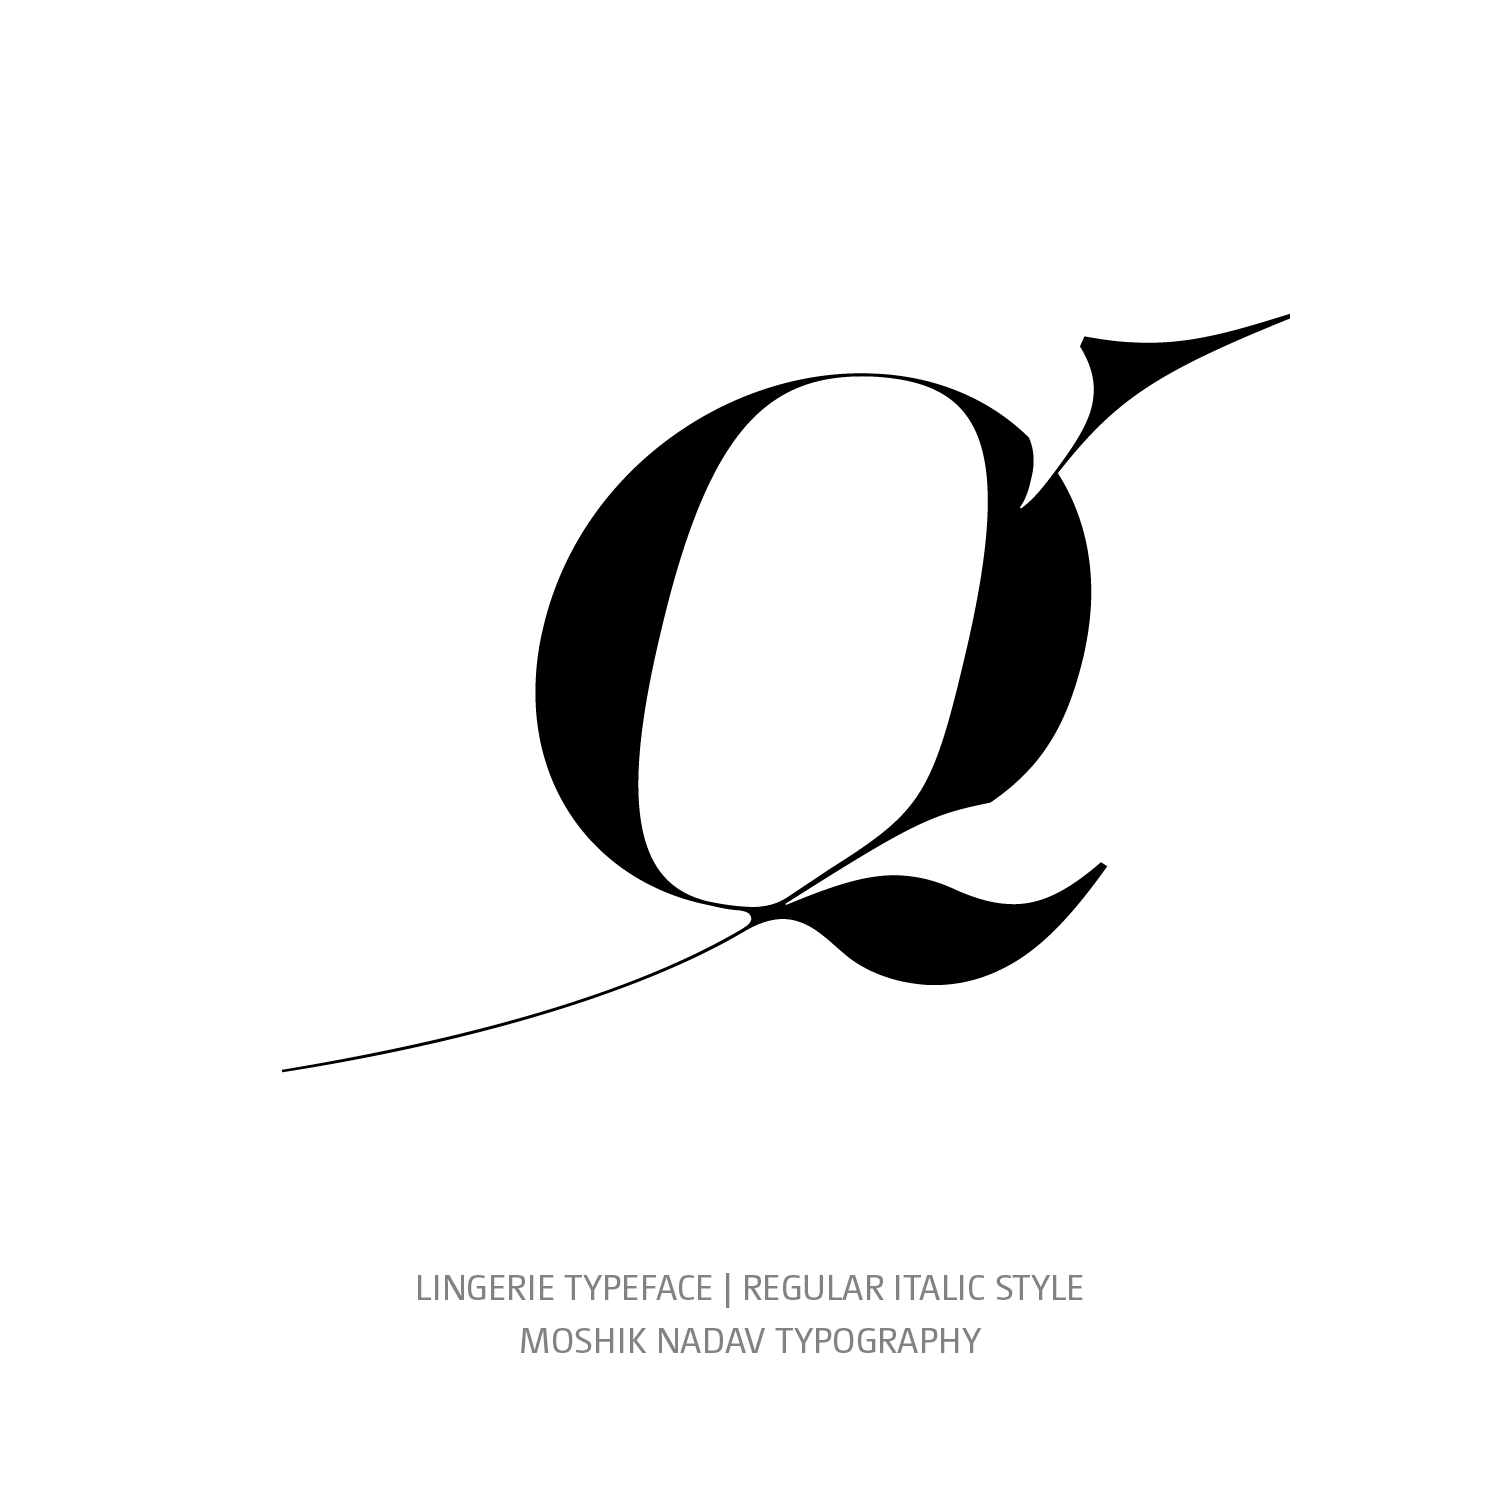 Lingerie Typeface Regular Italic q - Fashion fonts by Moshik Nadav Typography